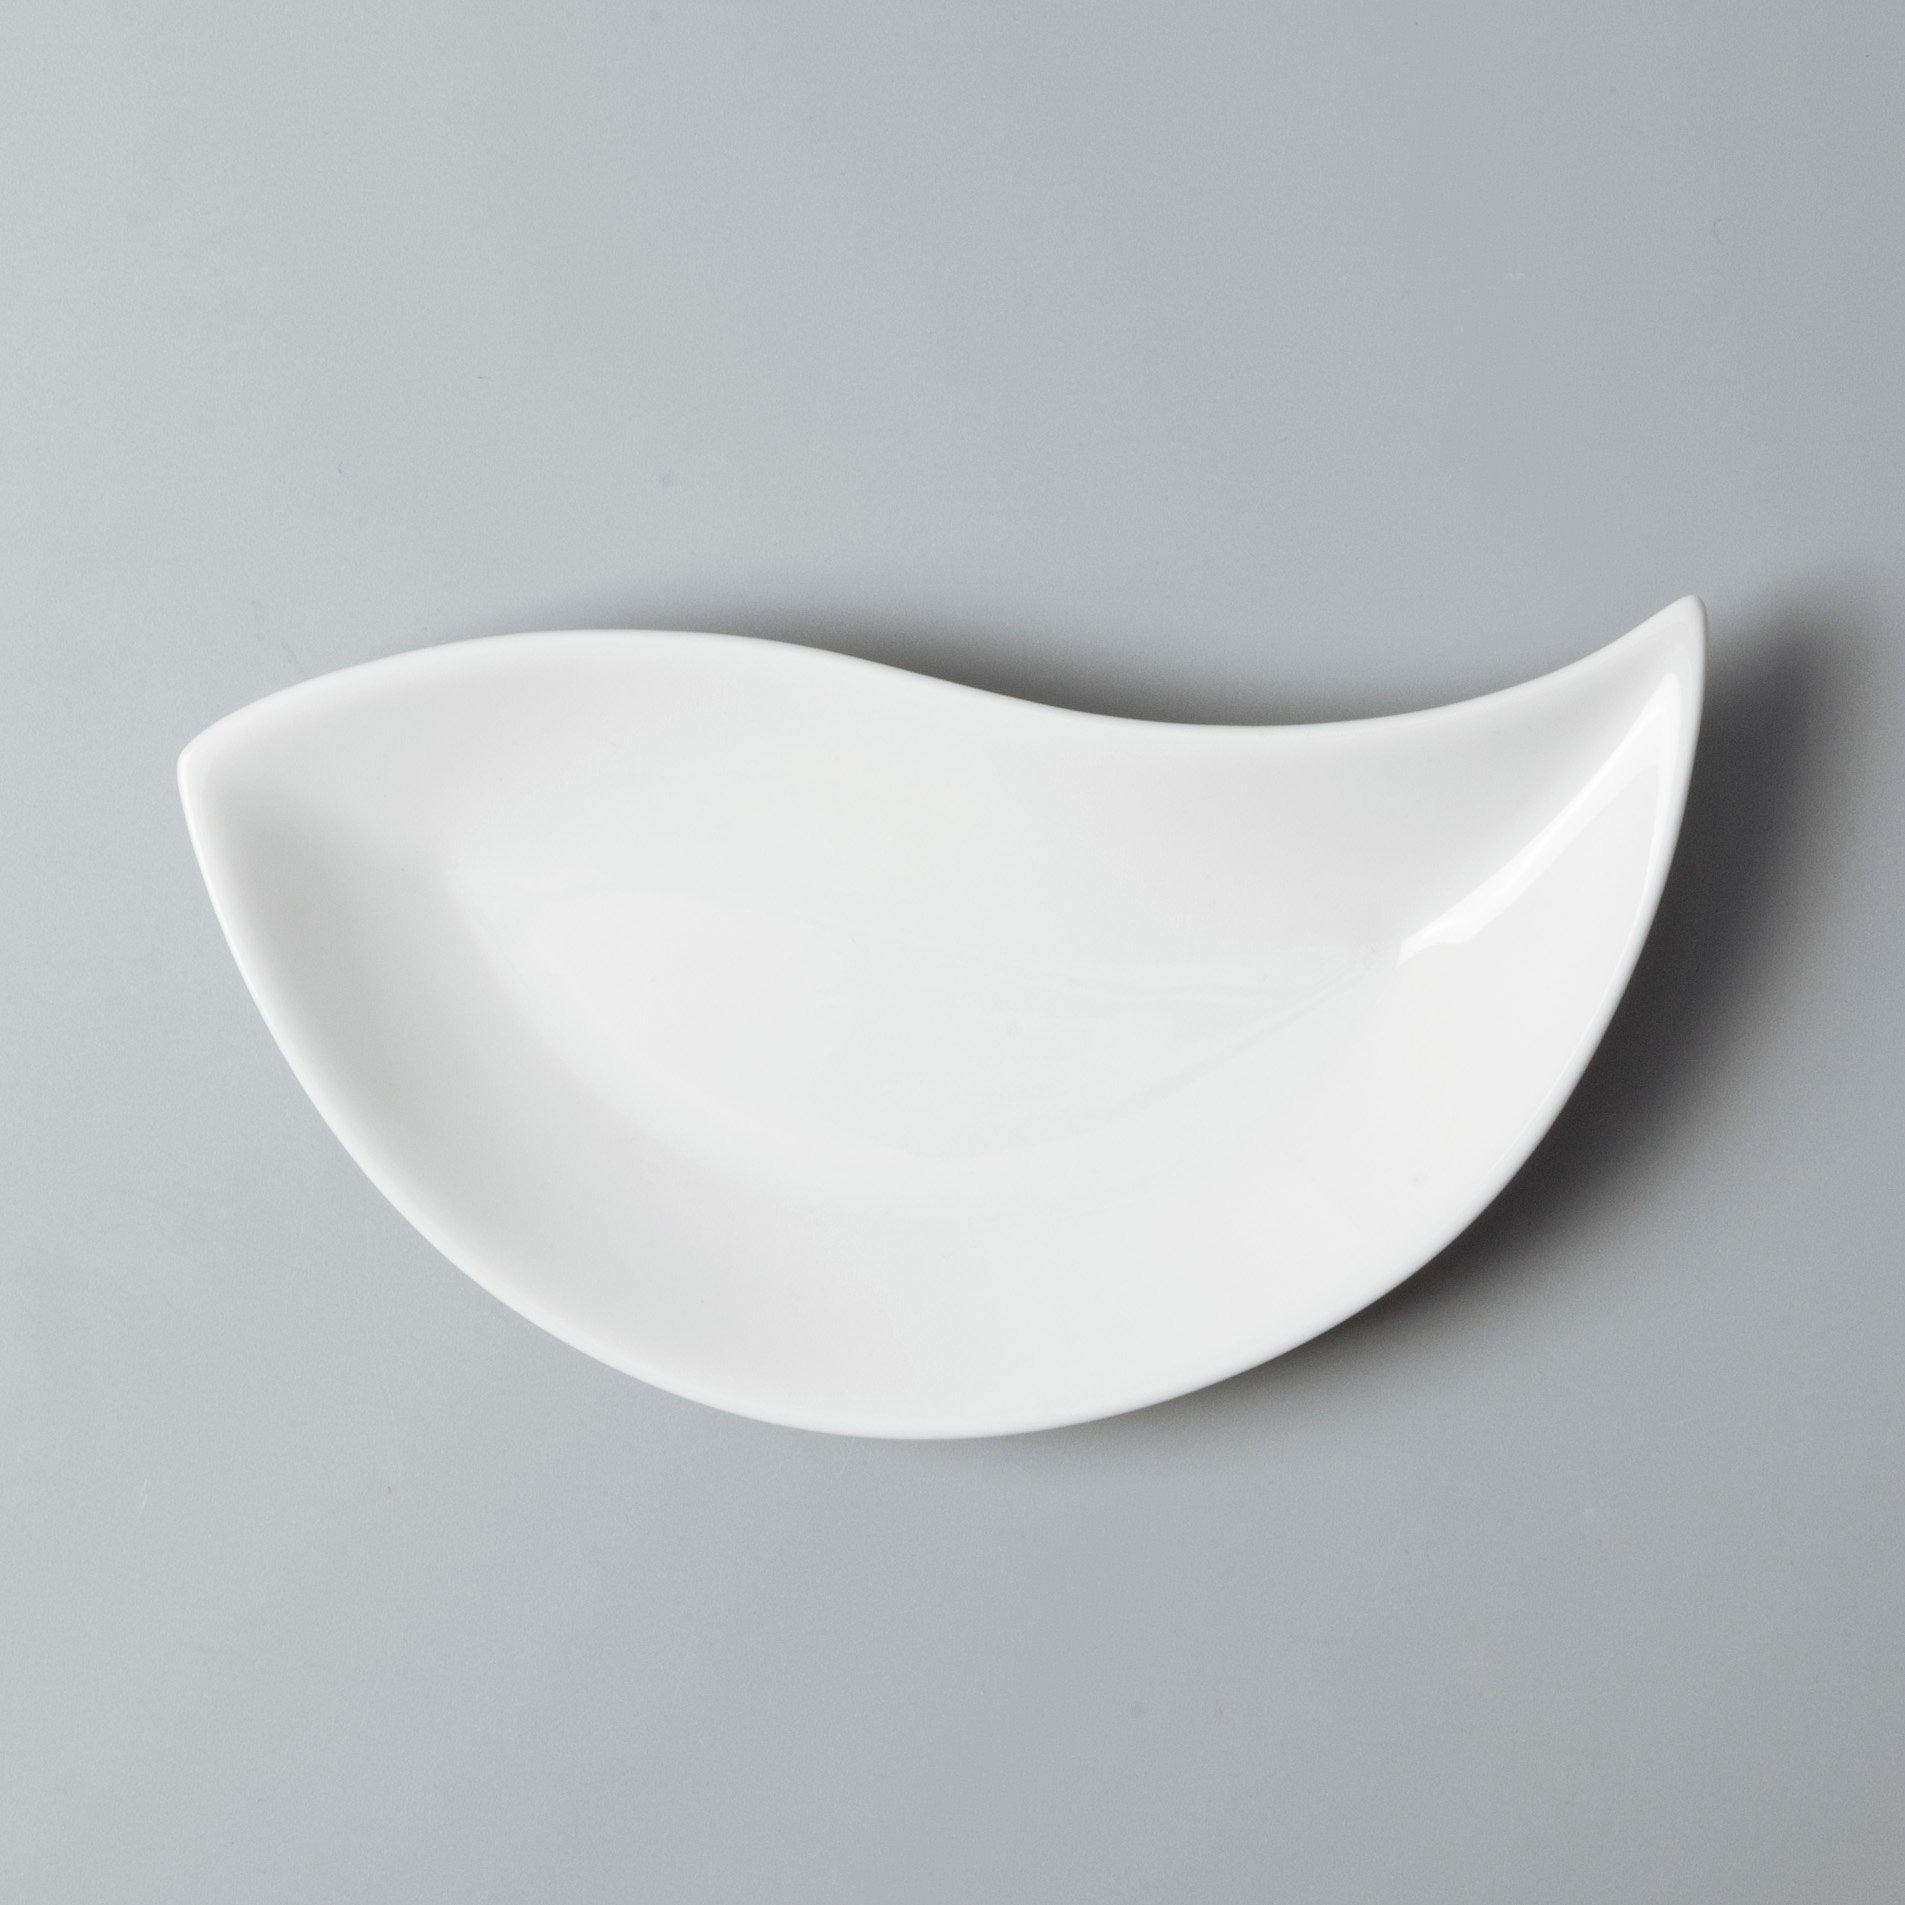 white porcelain tableware royalty two eight ceramics italian company